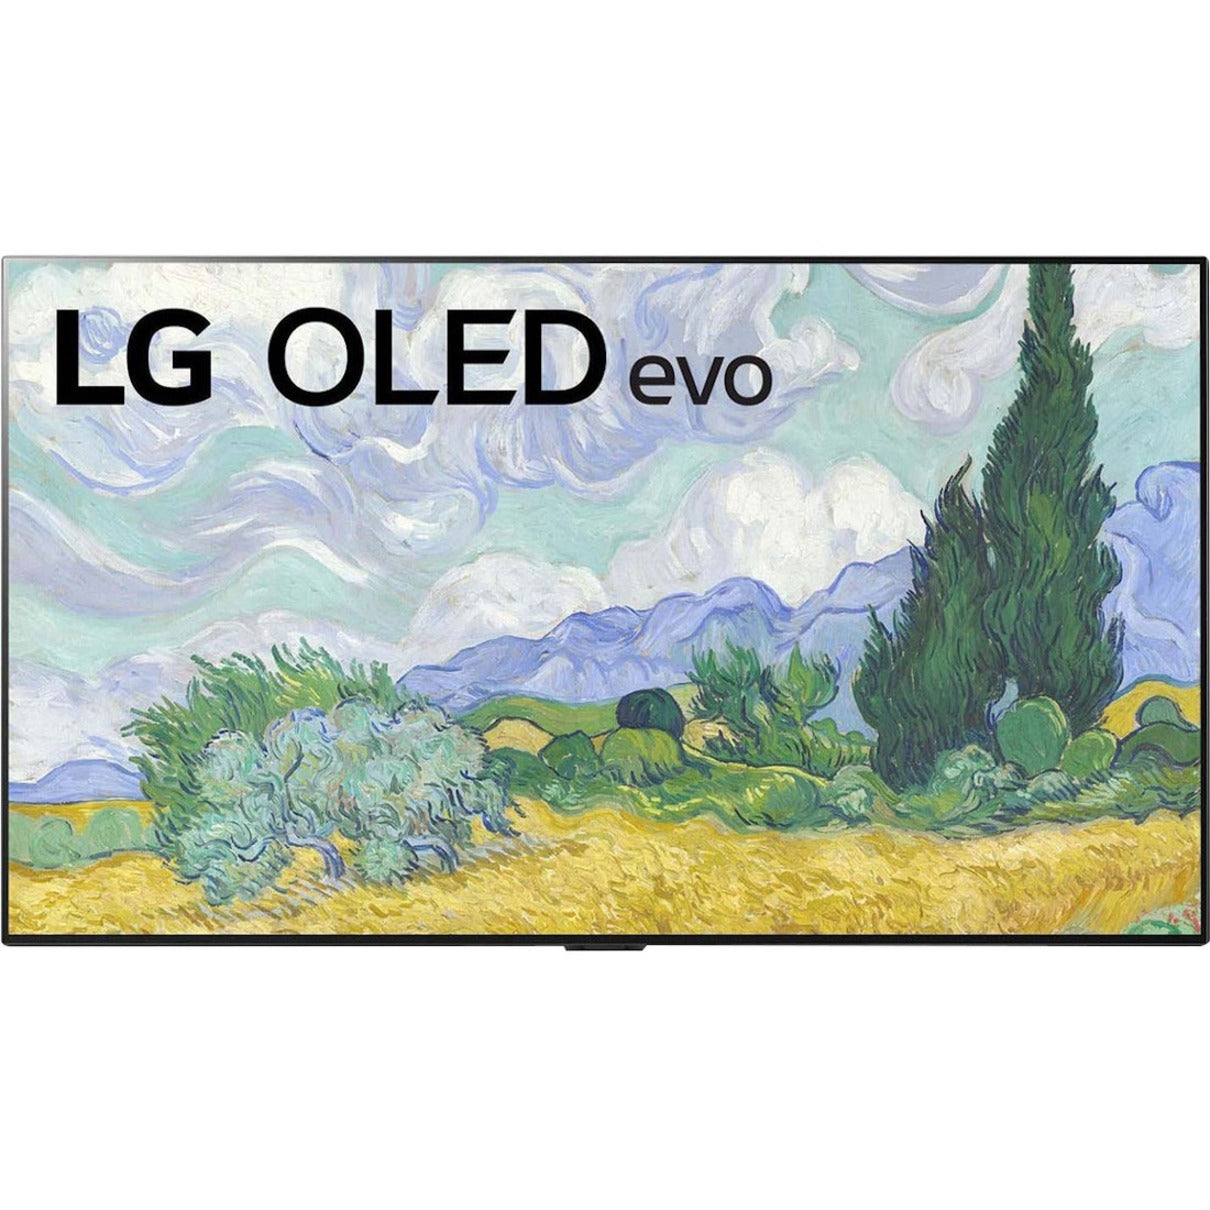 LG OLED77G1PUA G1 Smart OLED TV - 4K UHDTV, 76.7 Screen, Dolby Atmos, 120Hz Refresh Rate